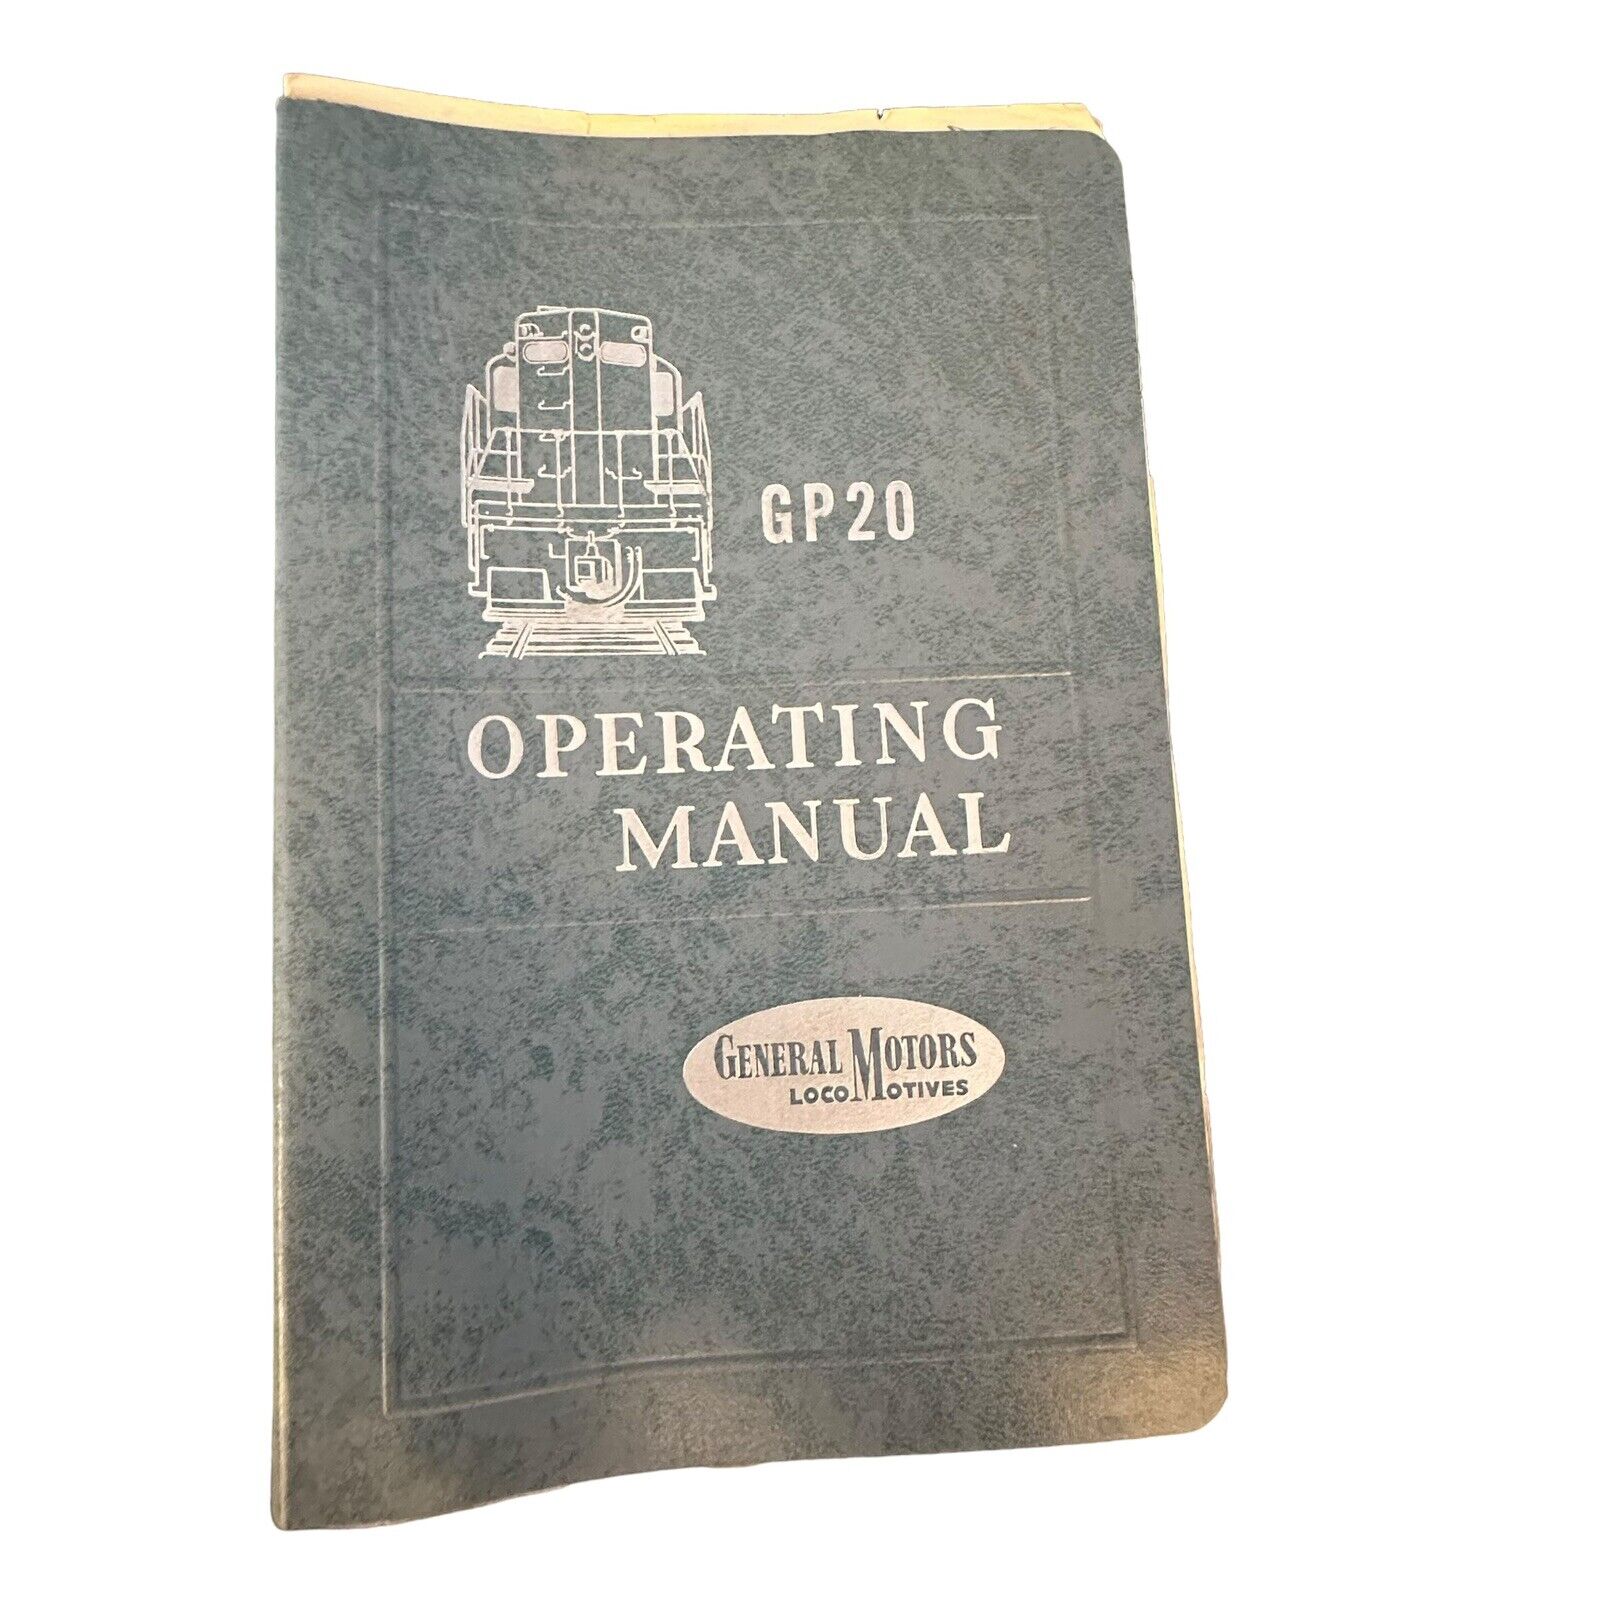 1959 EMD GM Diesel Locomotive Operating Manual For 2000 HP Model GP20 Turbo